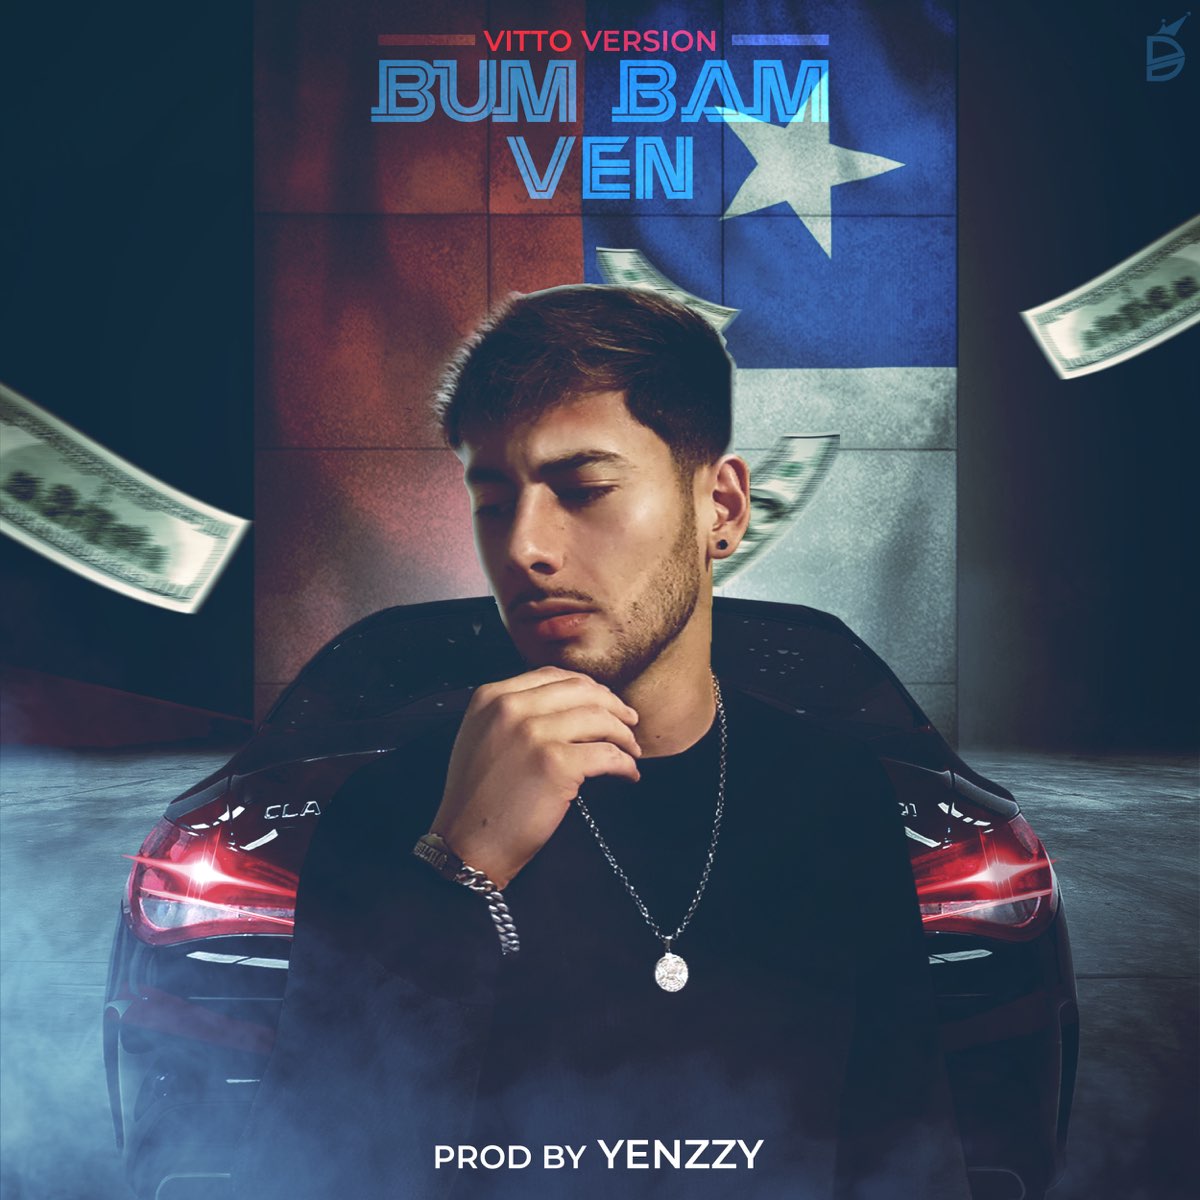 Bum Bam Ven (Vitto Mix) - Single by Vitto Unchicogood on Apple Music